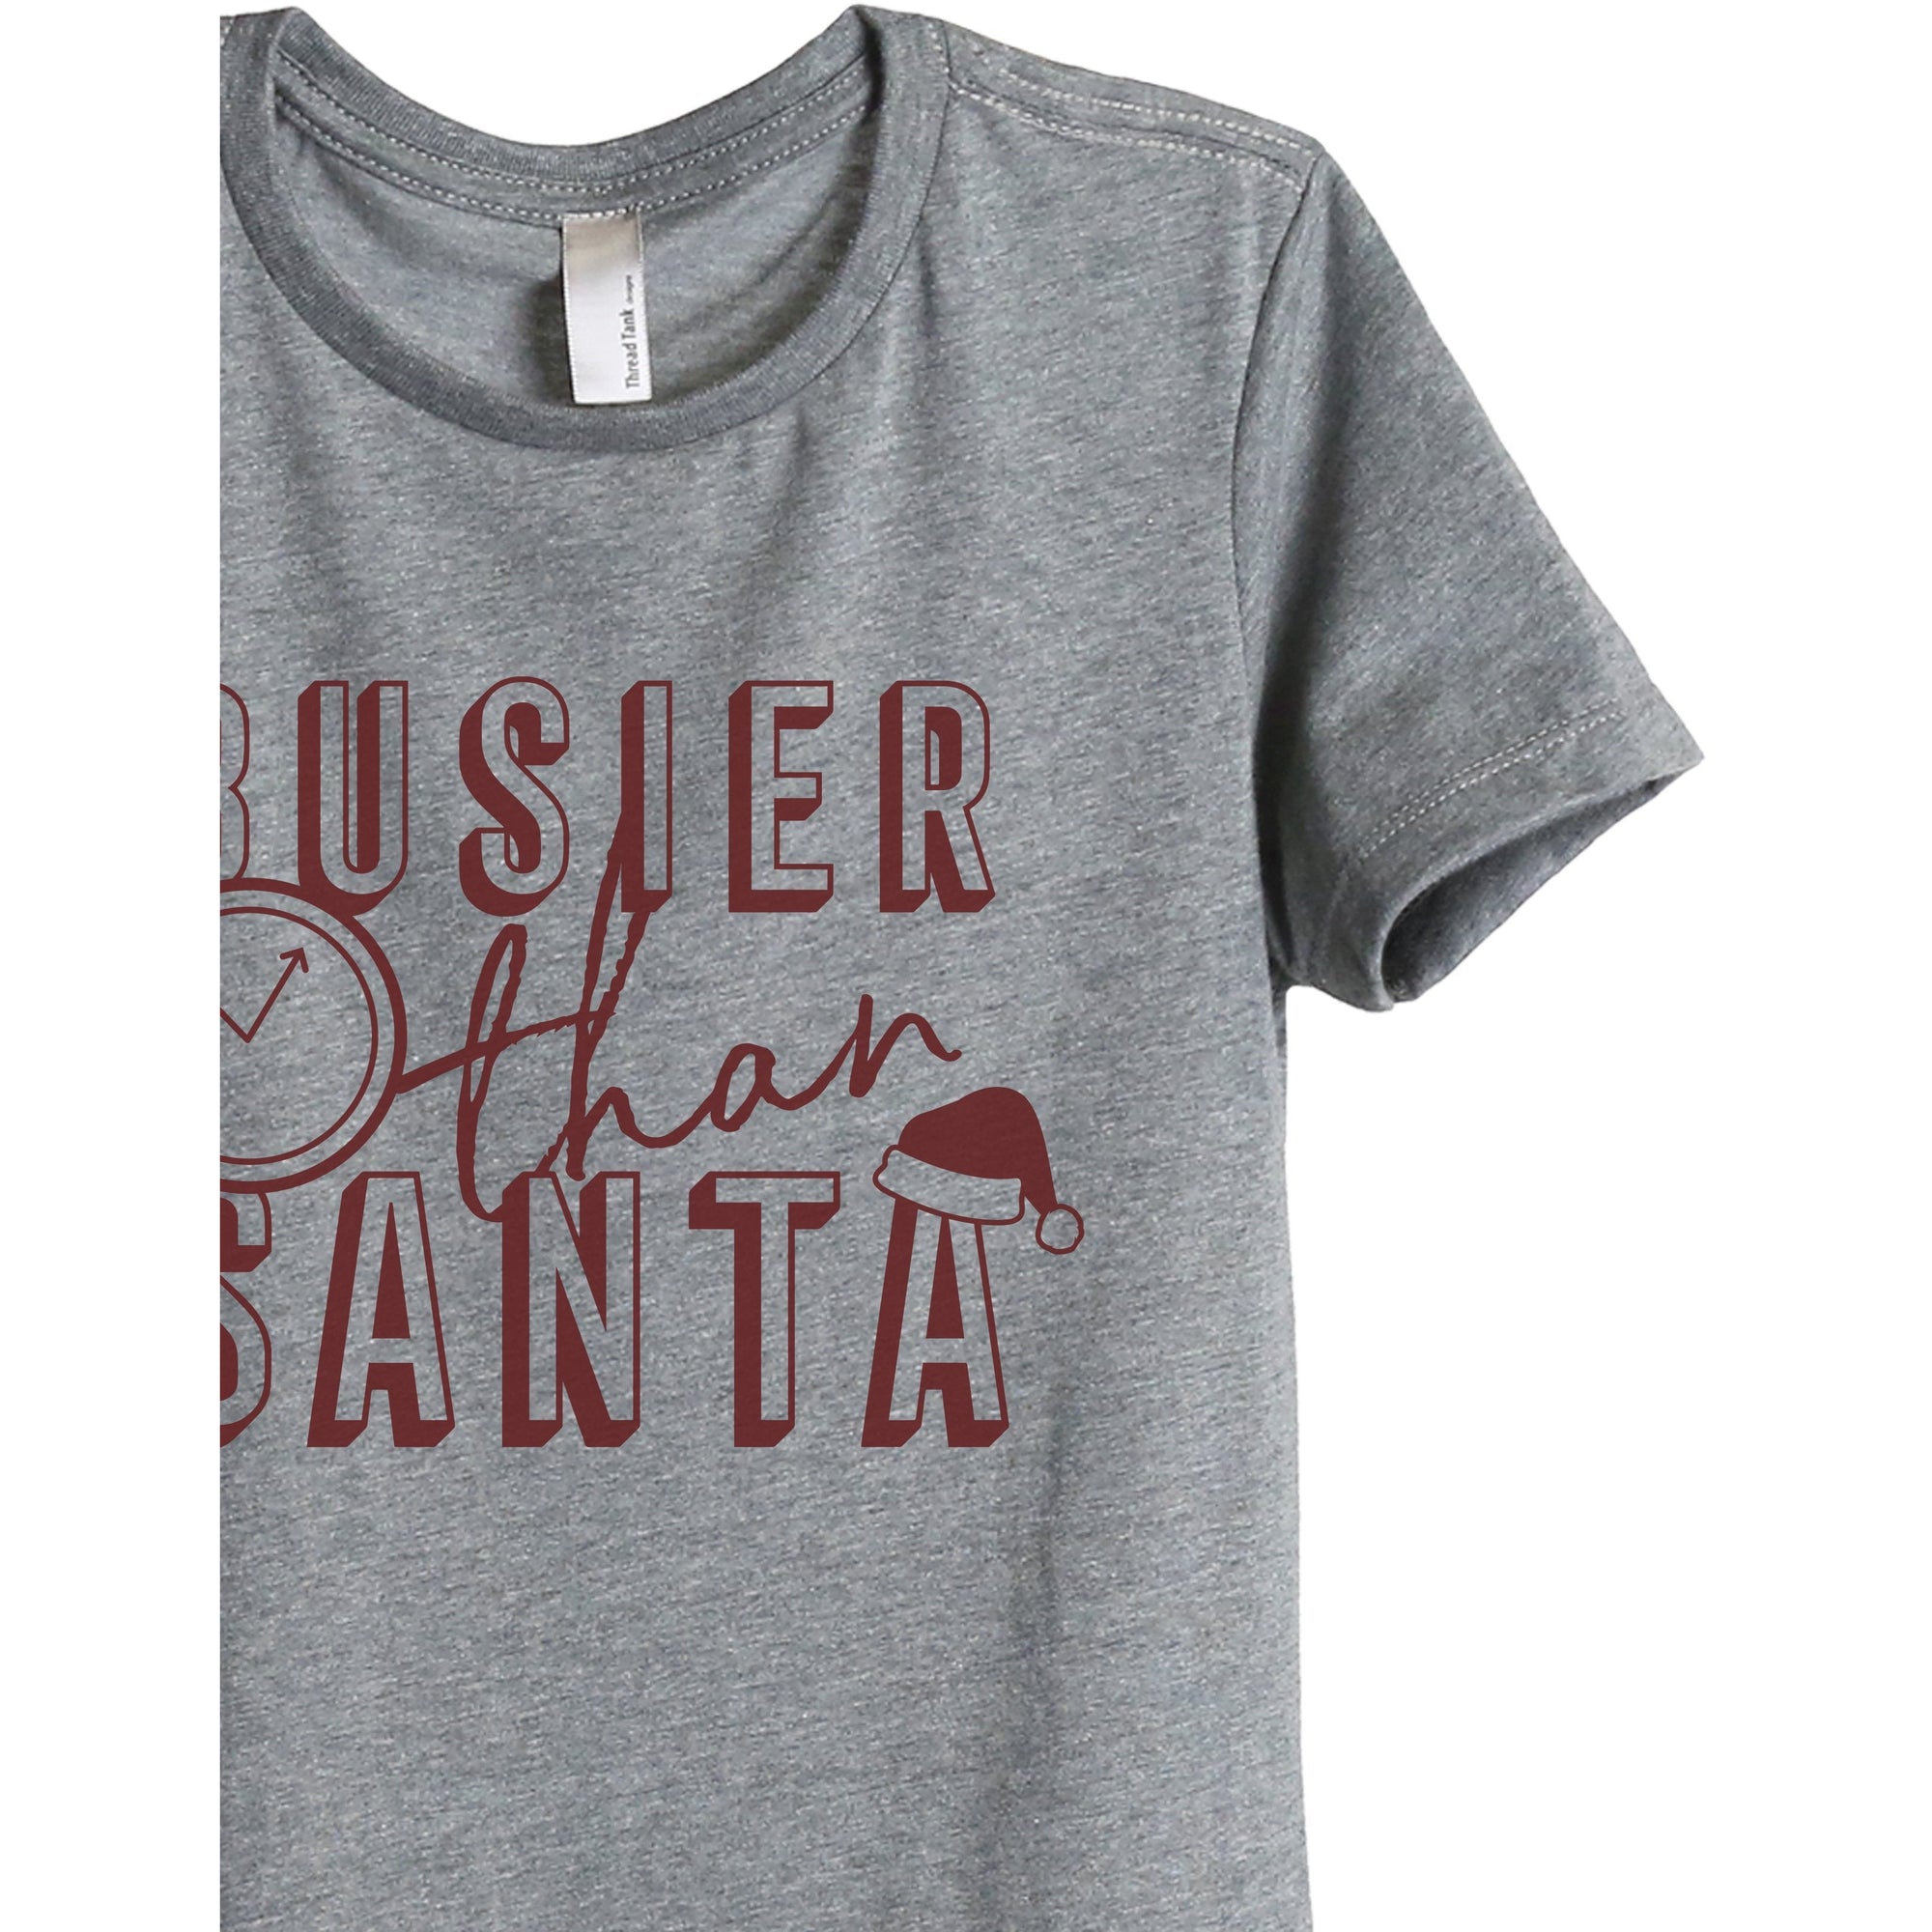 Busier Than Santa Women's Relaxed Crewneck T-Shirt Top Tee Heather Grey Scarlet Print